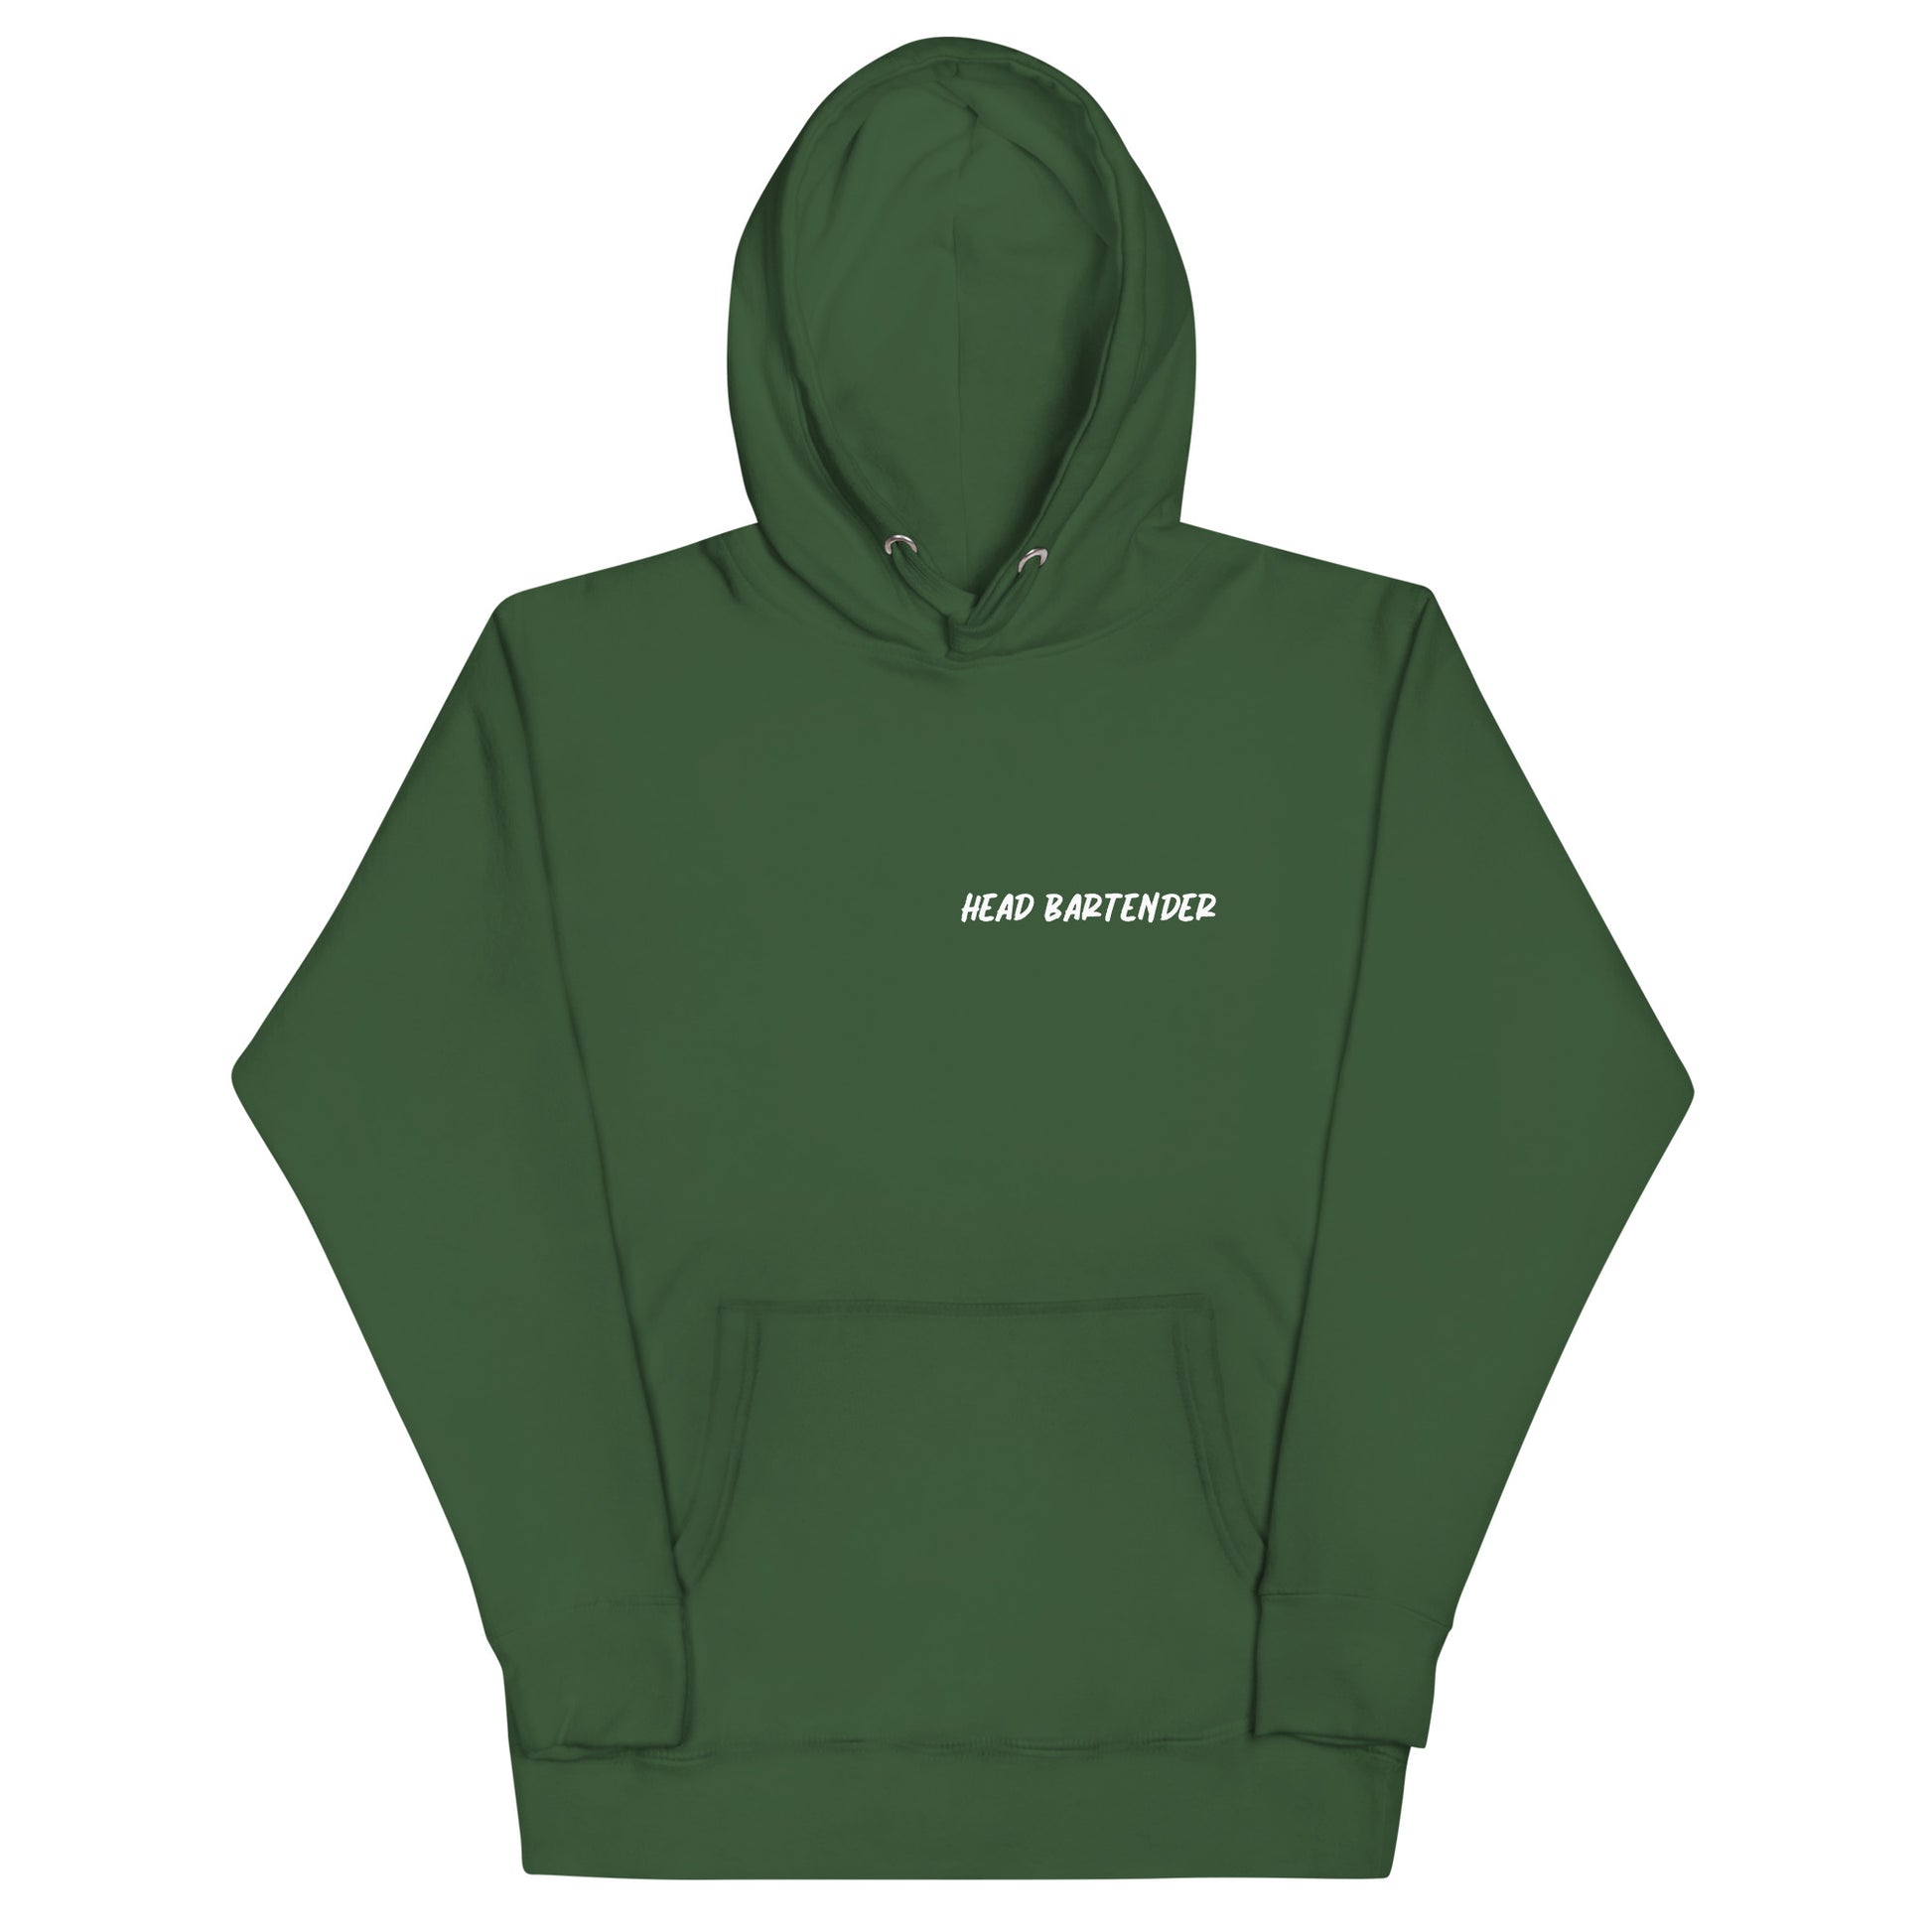 Forest green unisex hoodie says "Head Bartender" 